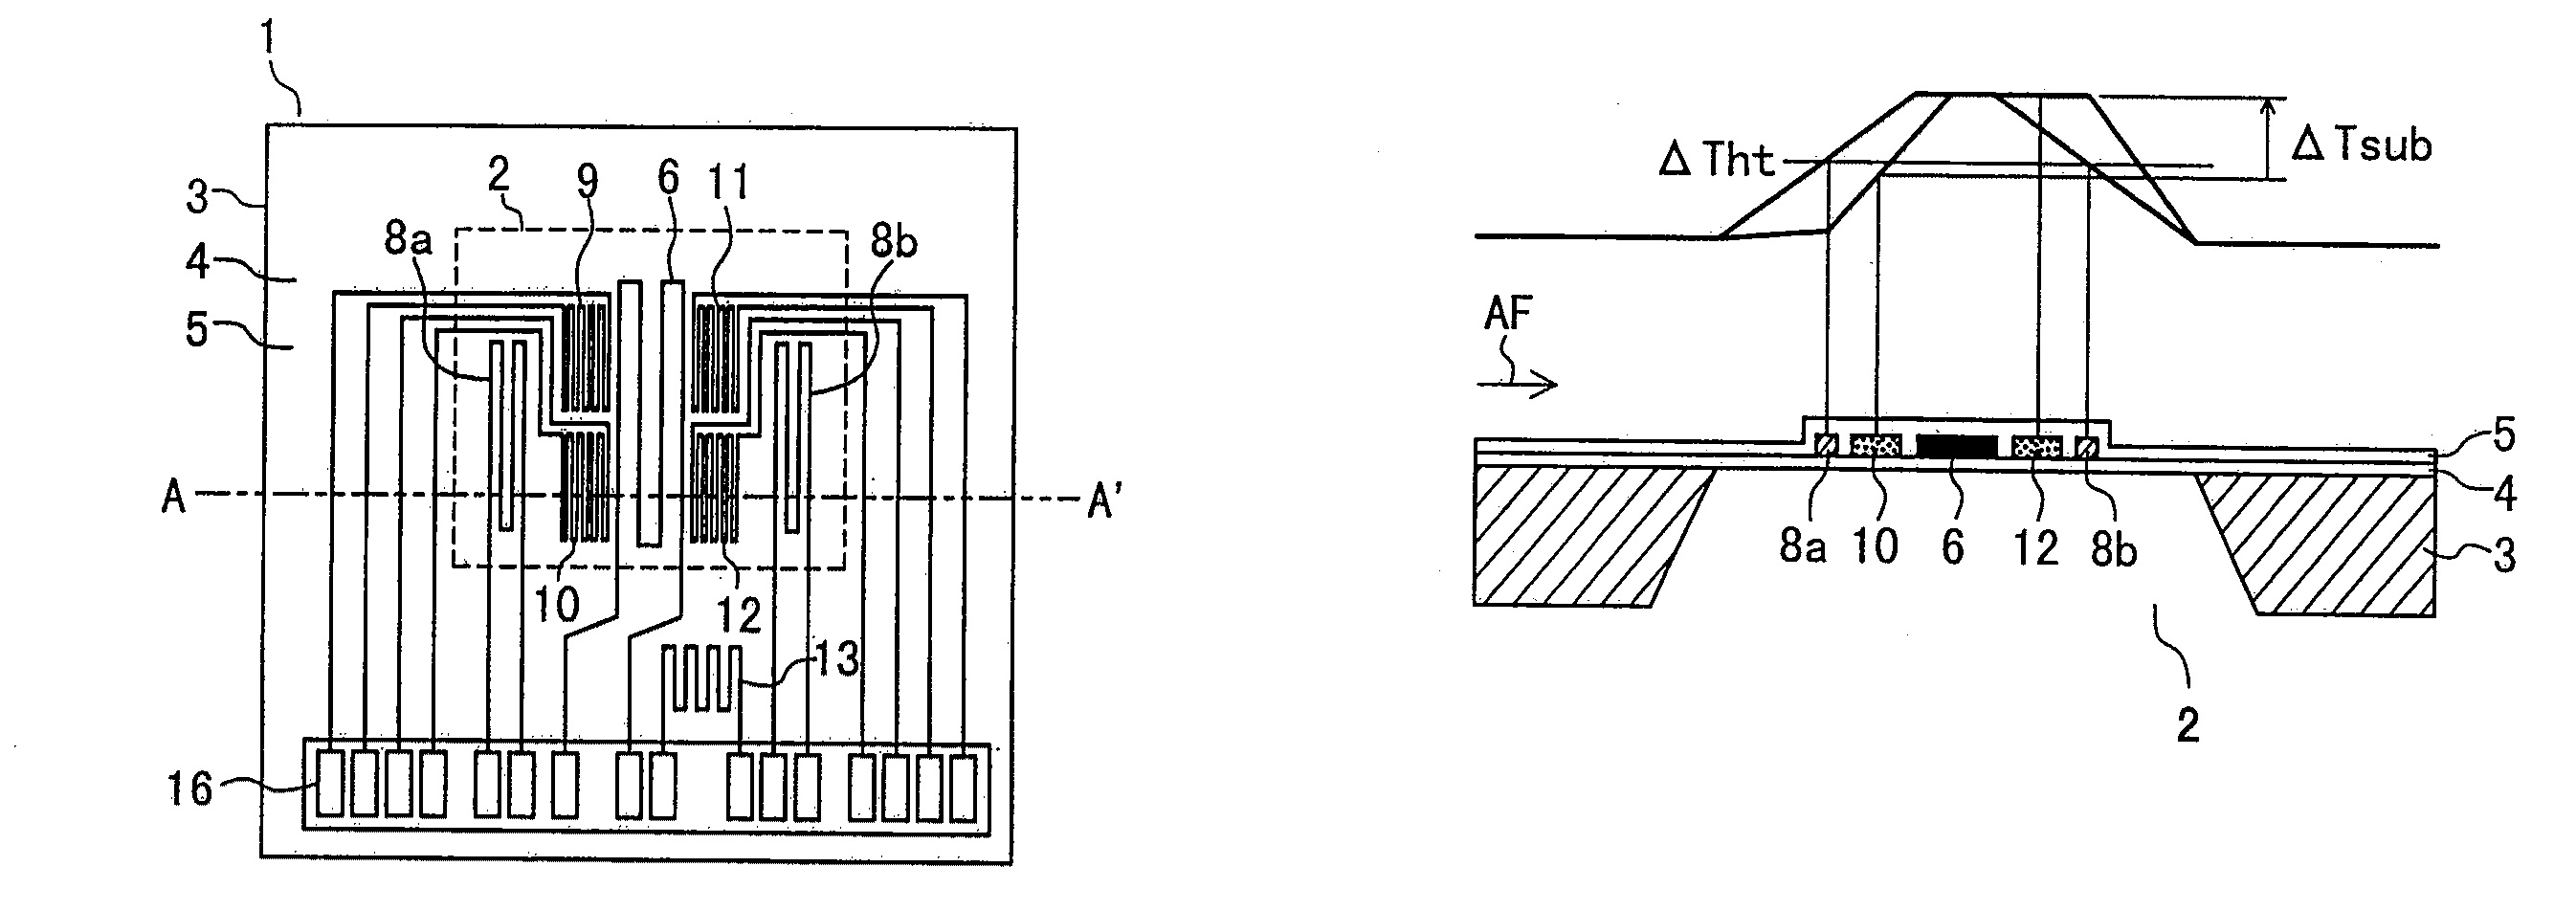 Thermal flowmeter